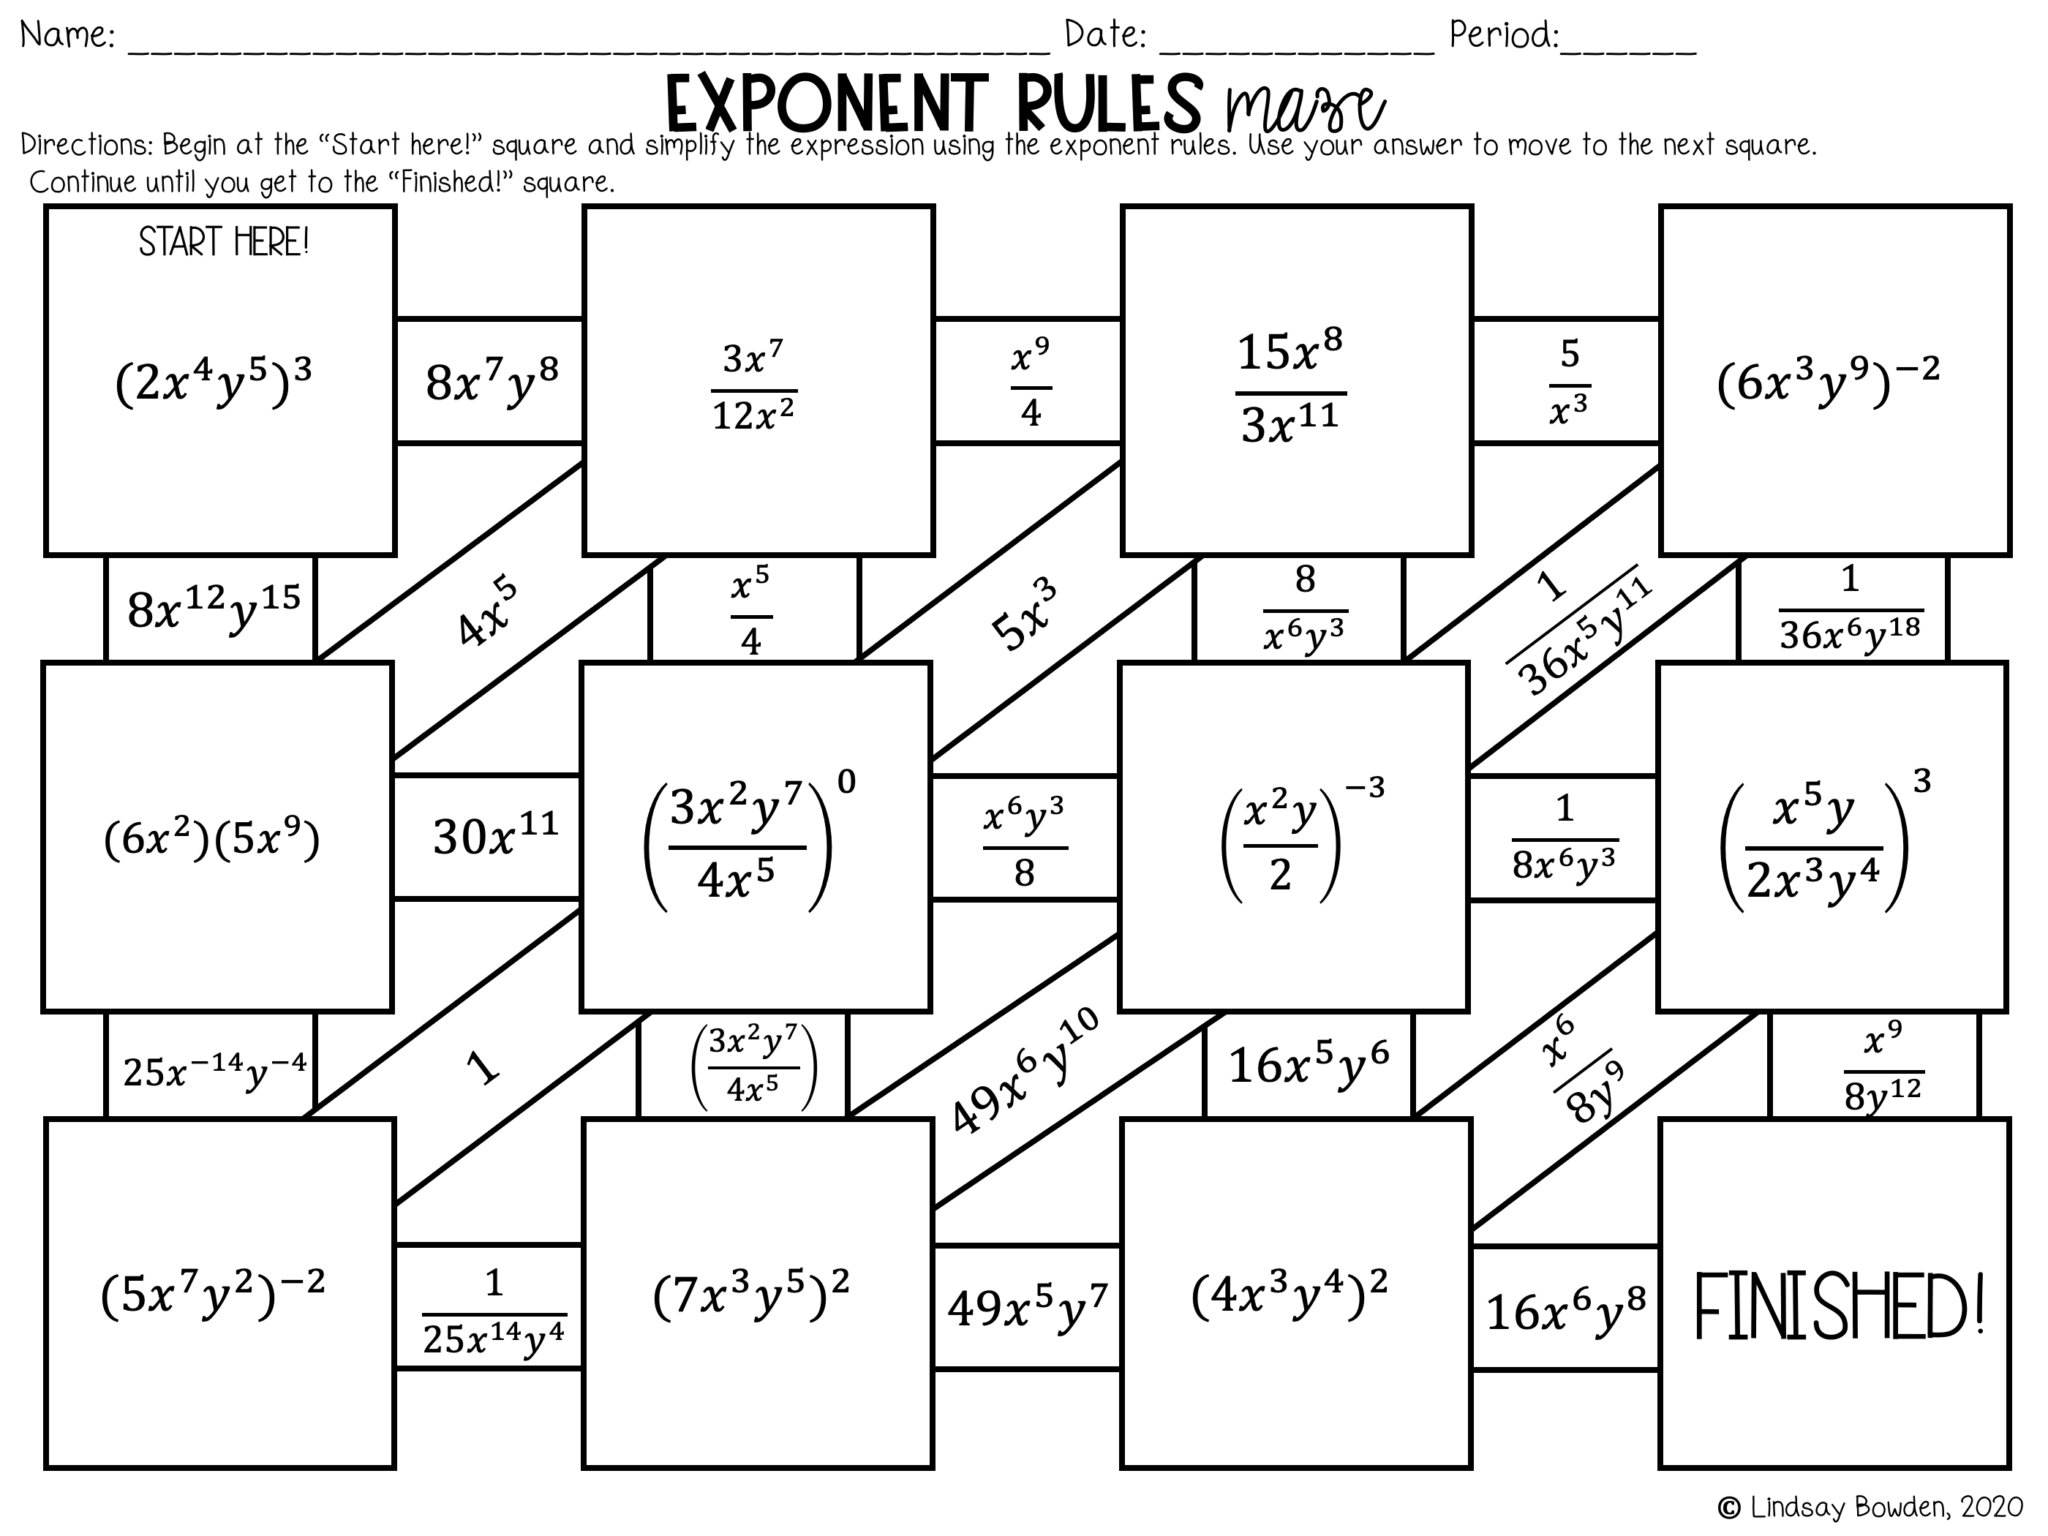 exponent-rules-digital-maze-lindsay-bowden